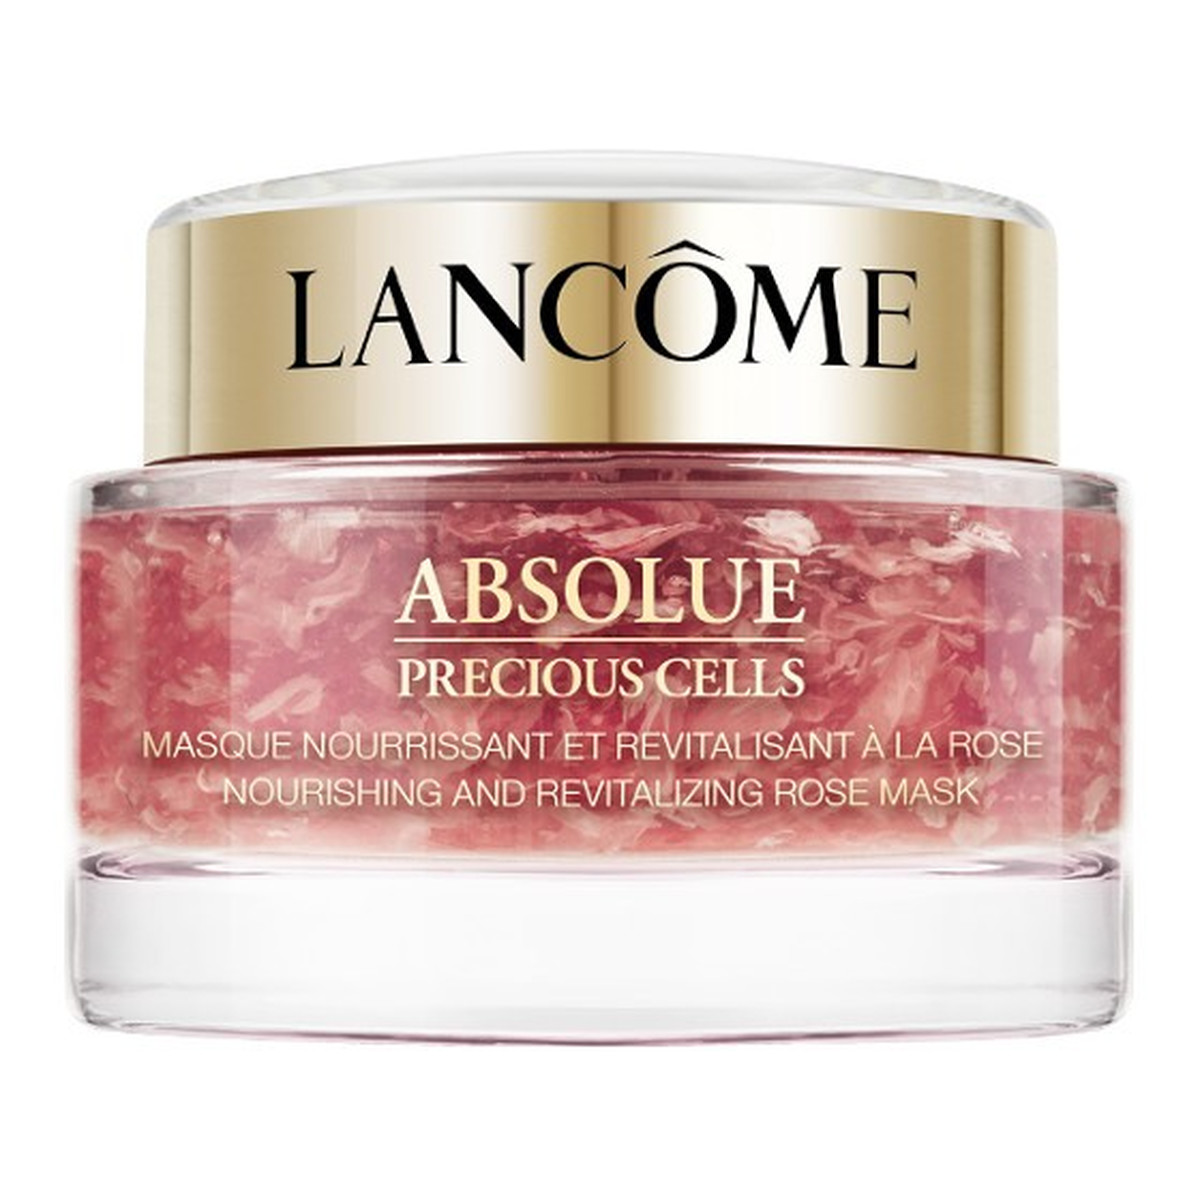 Lancome Absolue Precious Cells różana maska rewitalizująca 75ml